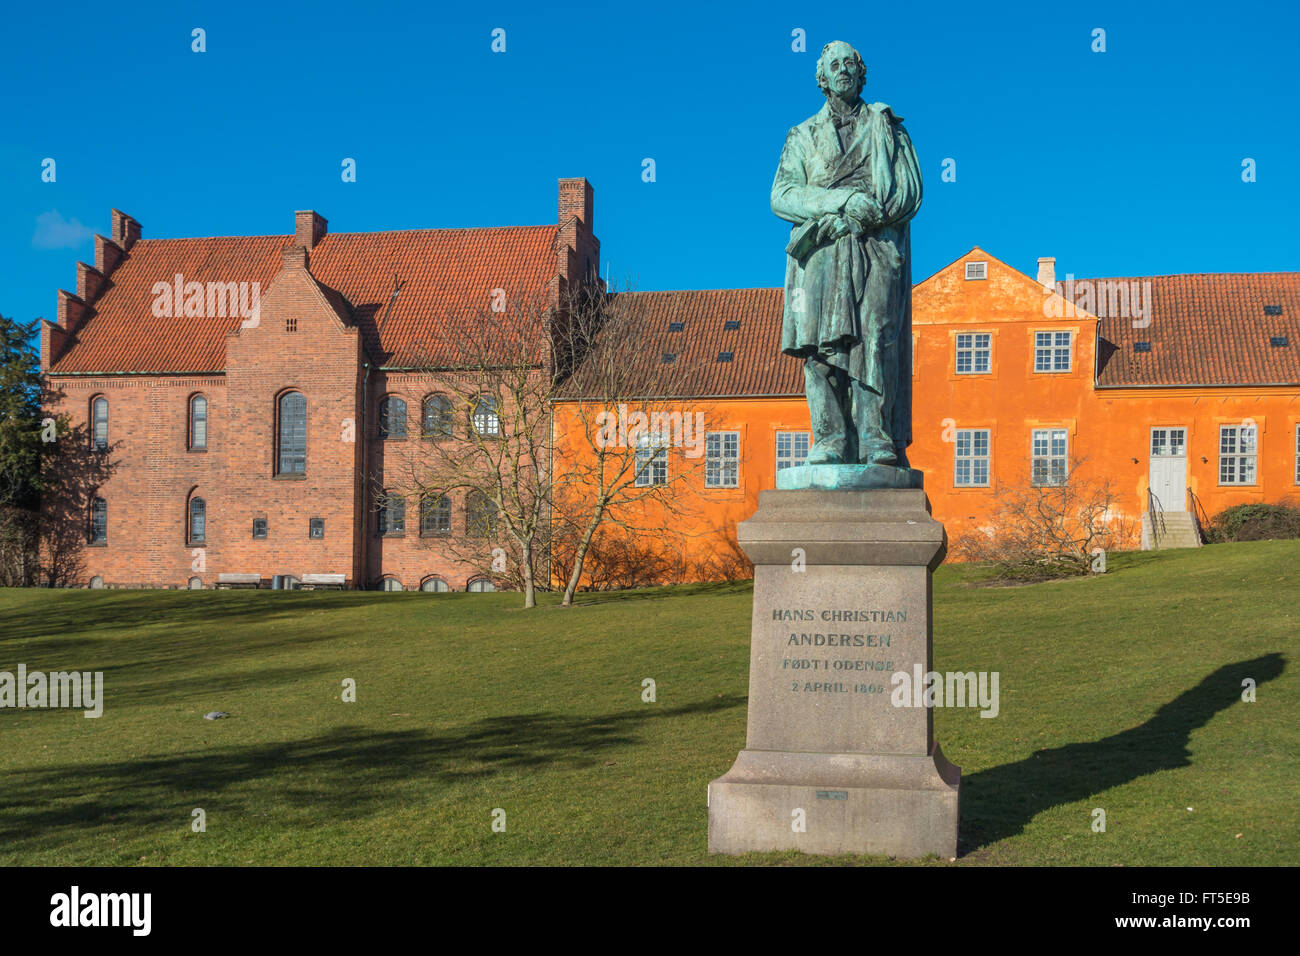 Hans Christian Andersen statue near the river in Odense, Dernmark Stock Photo